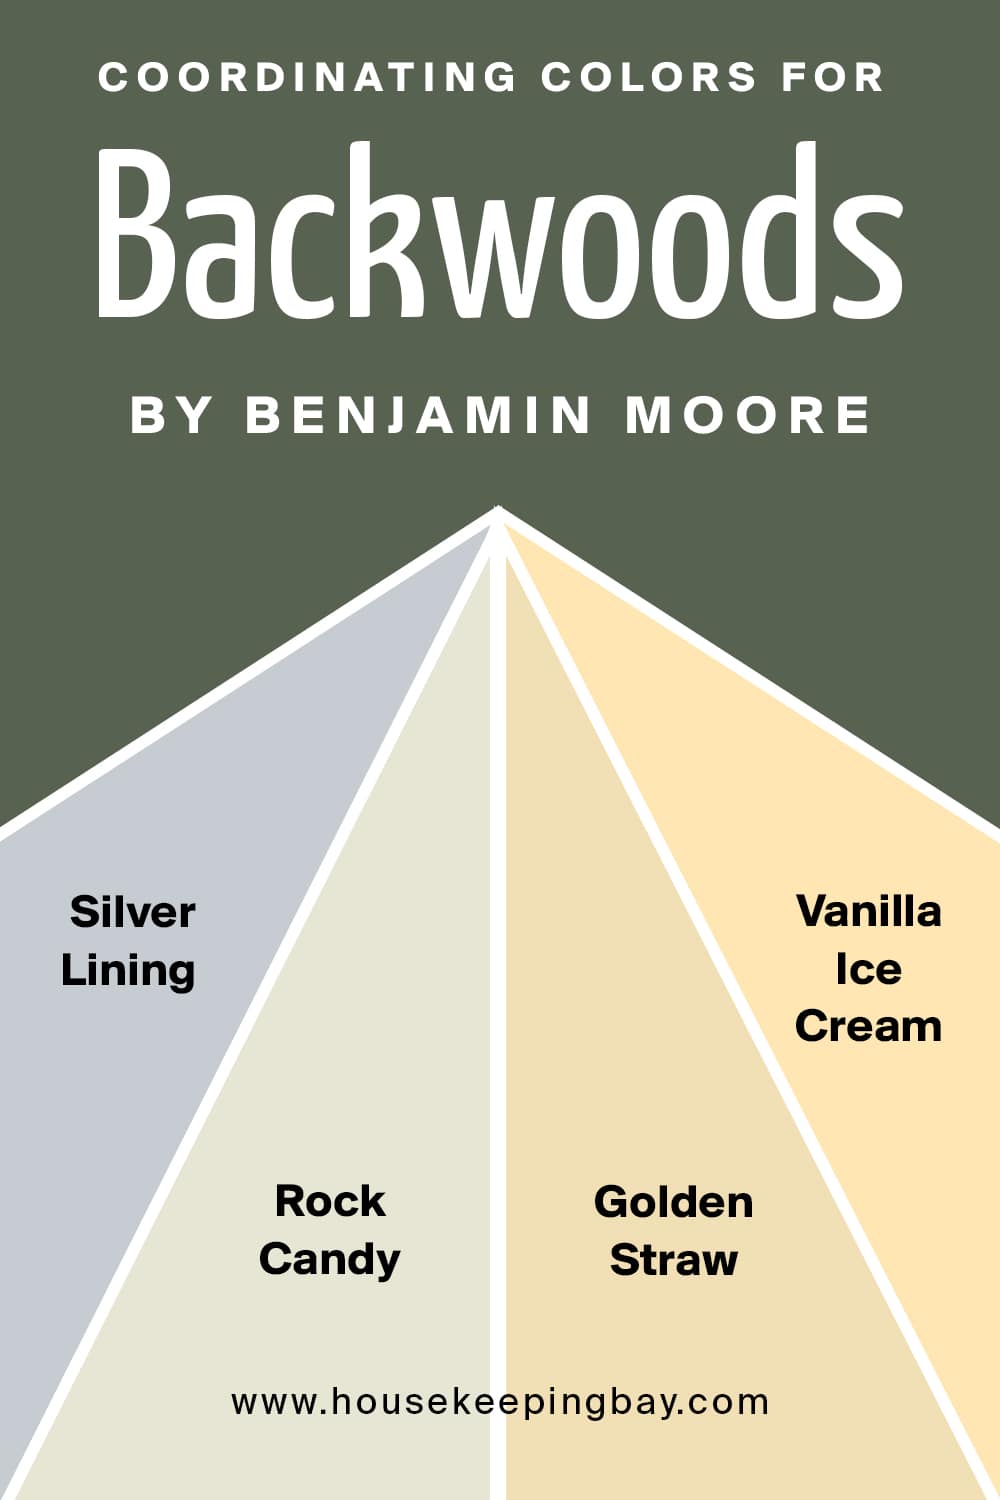 Coordinating Colors for Backwoodsby Benjamin Moore